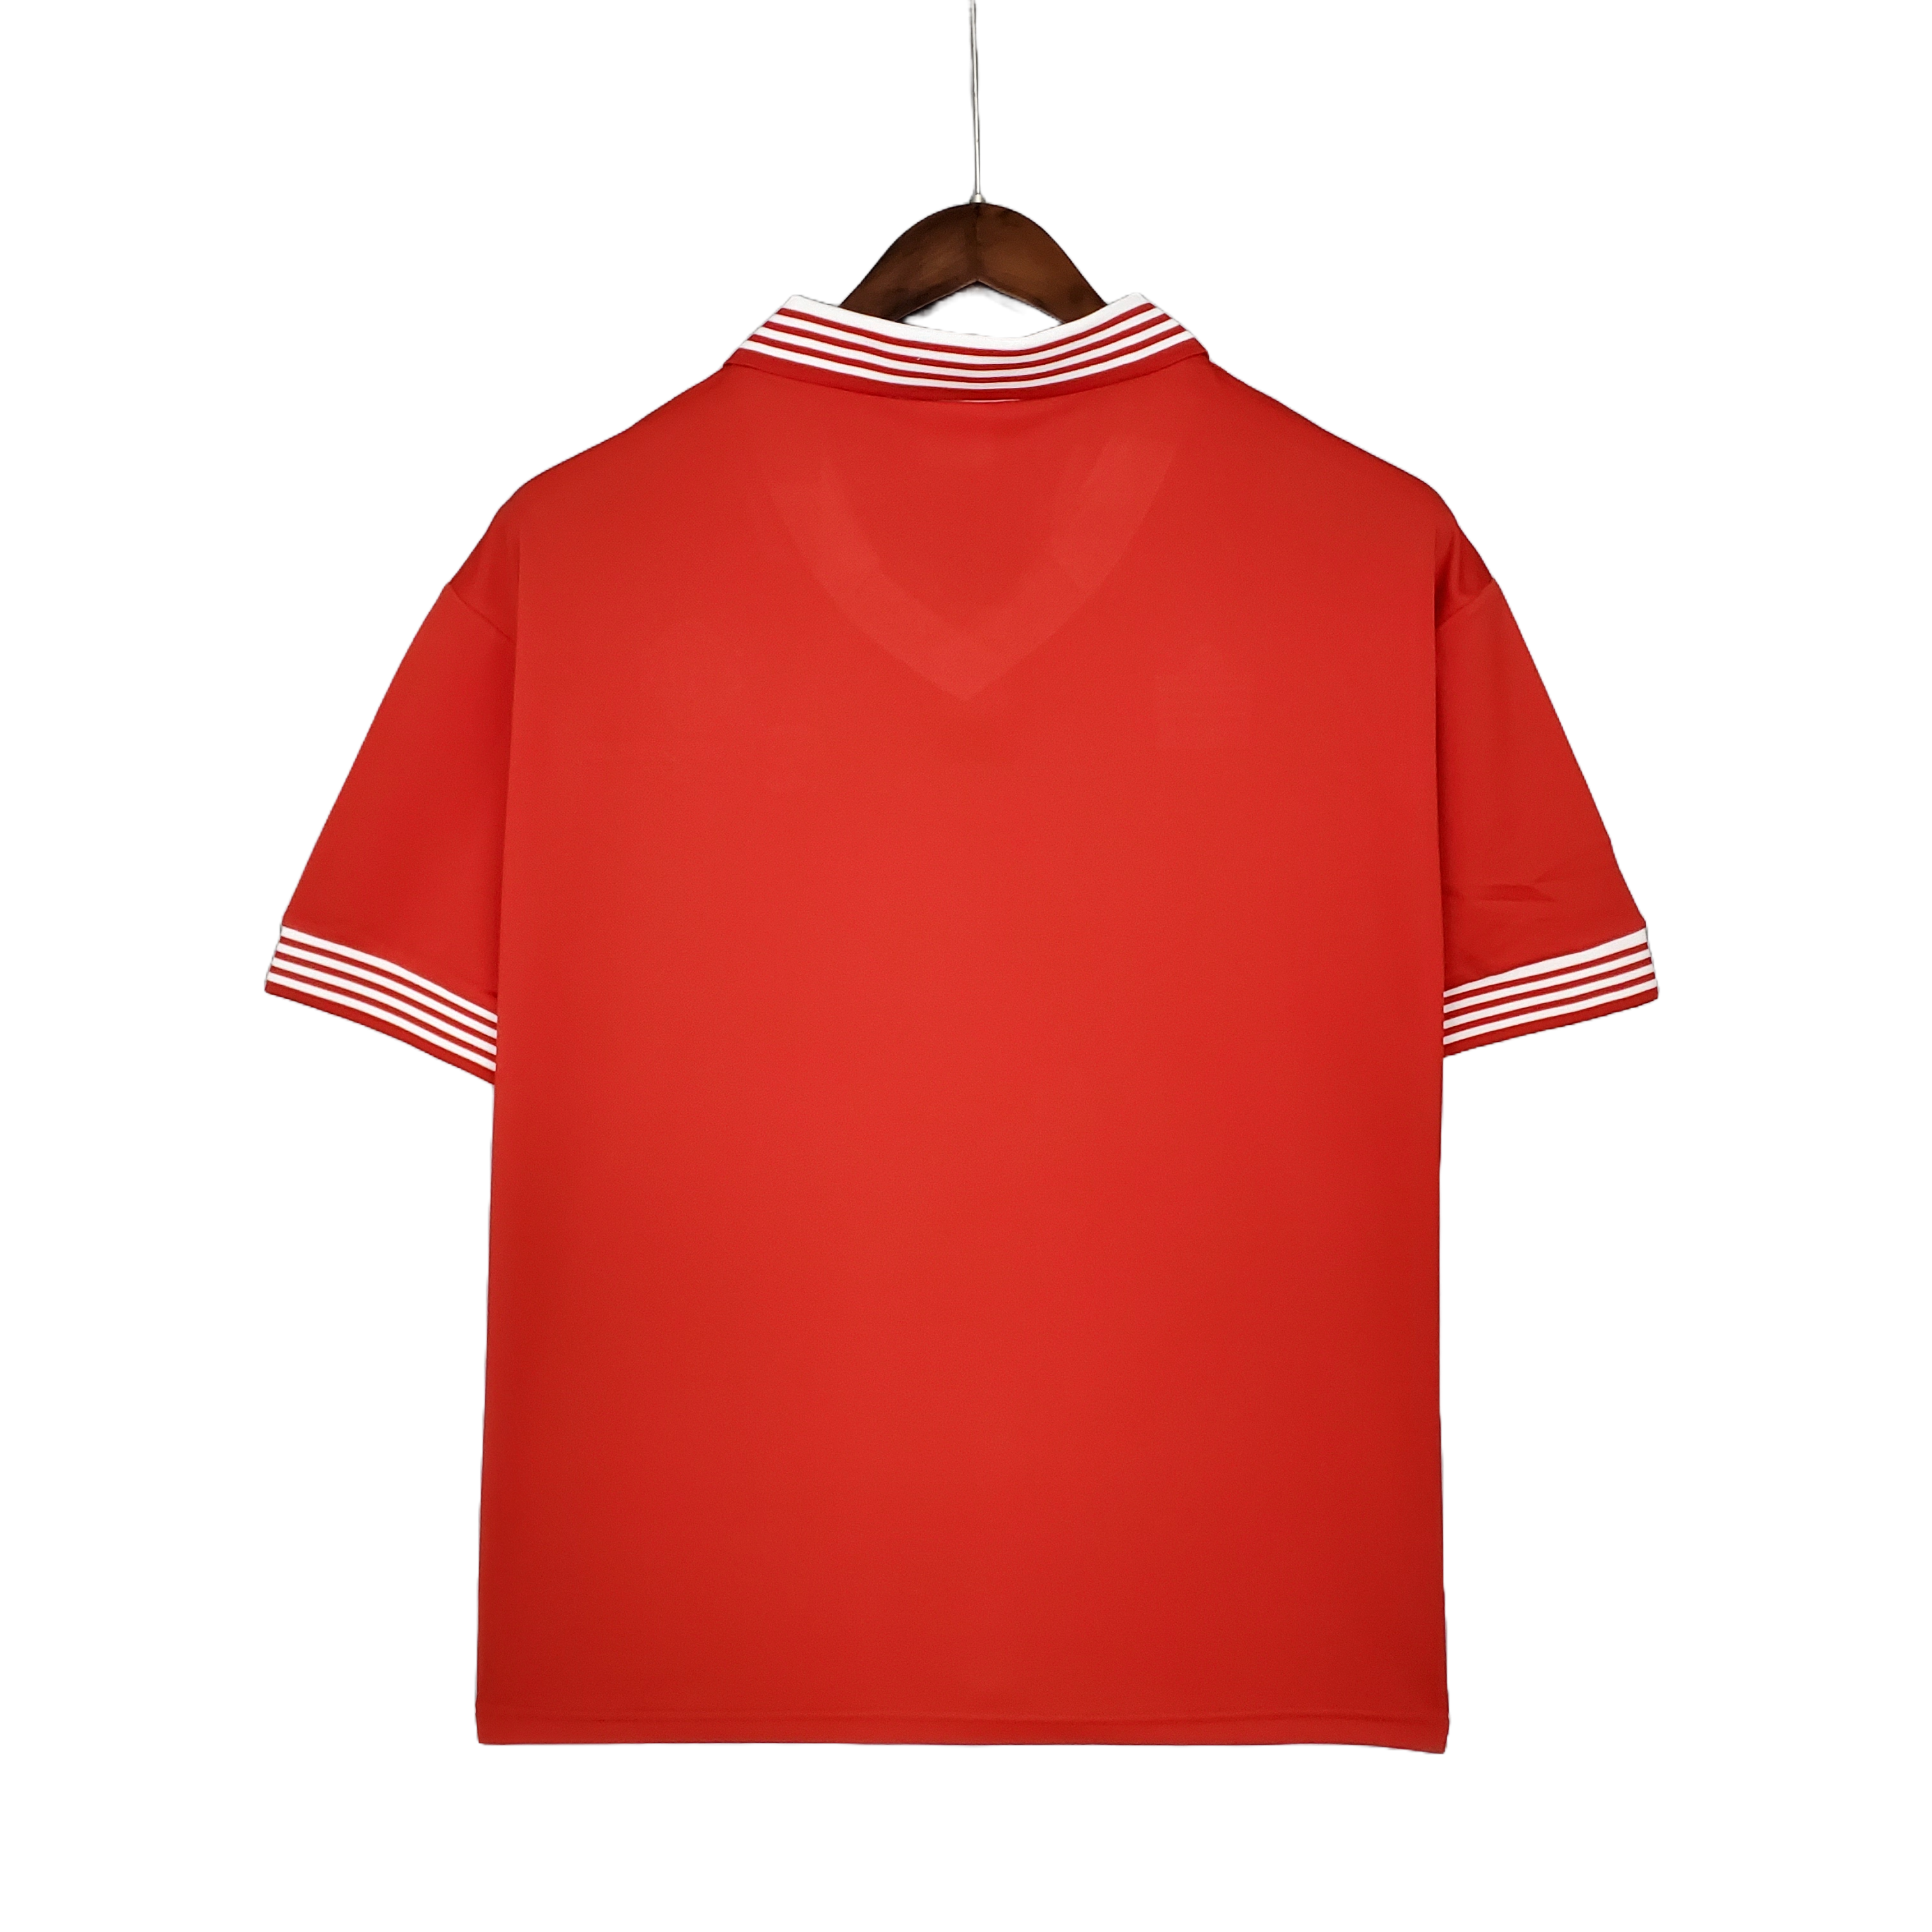 Manchester United 1977 retro shirt 